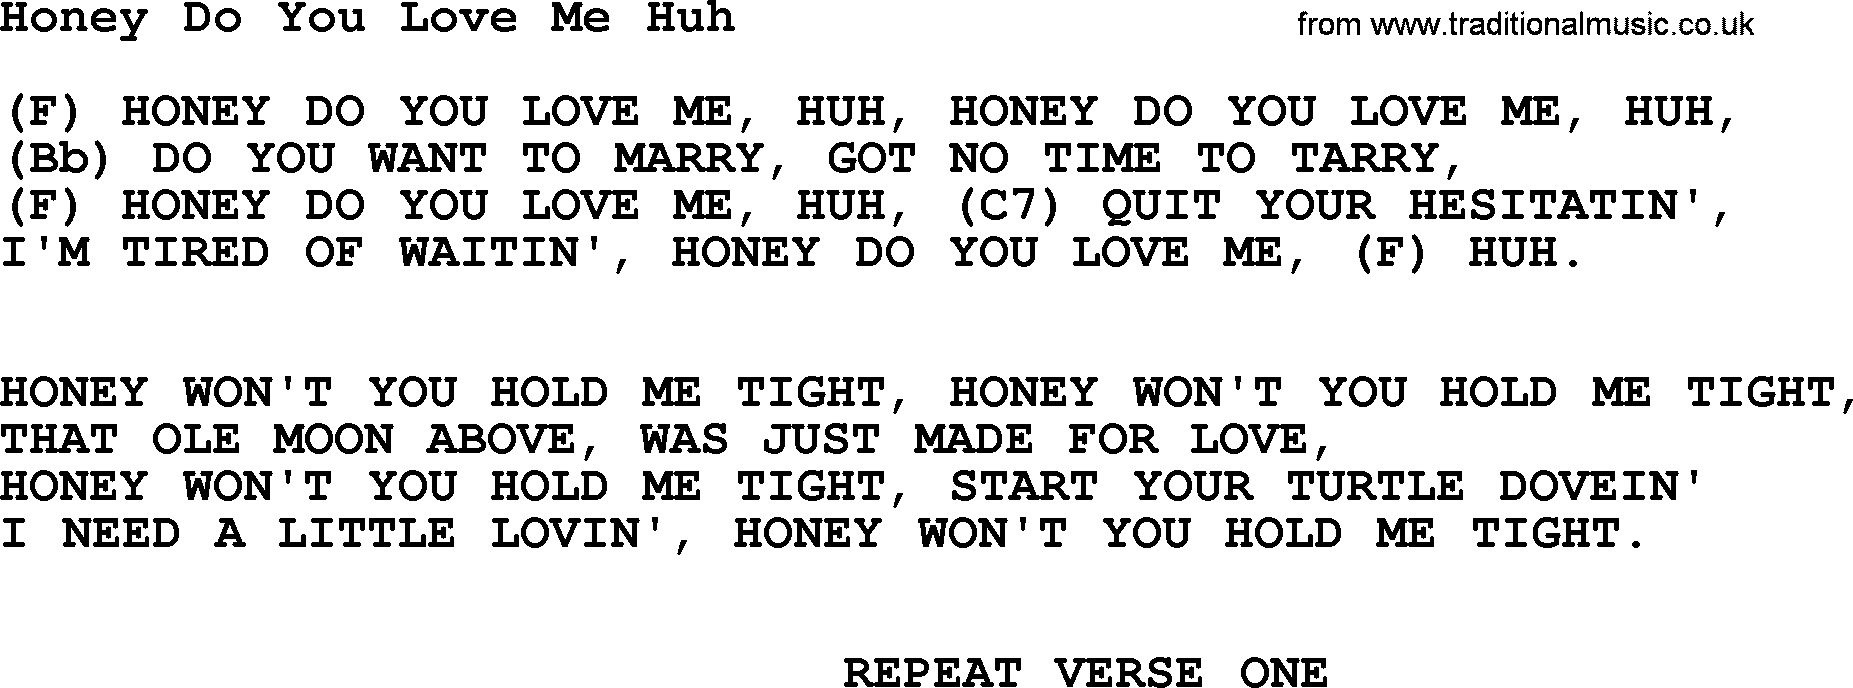 Hank Williams song Honey Do You Love Me Huh, lyrics and chords